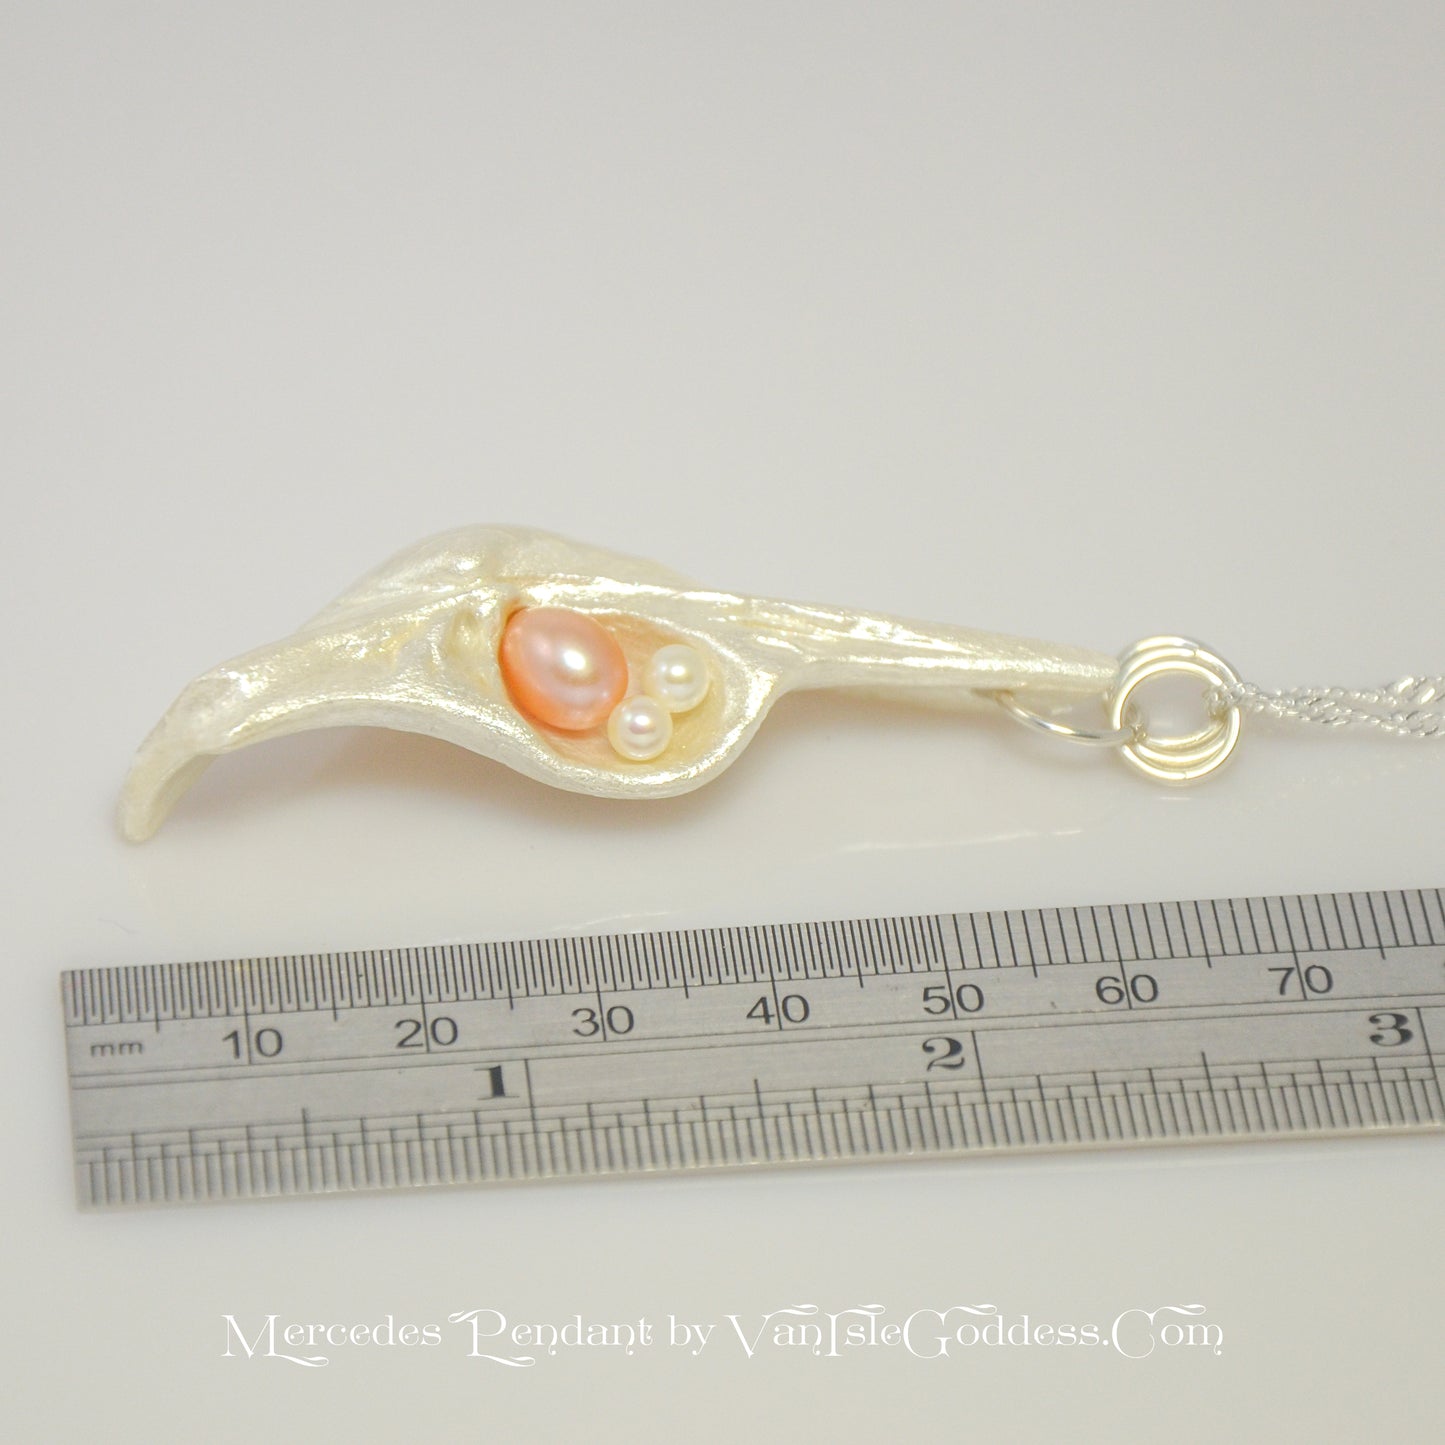 Mercedes Freshwater Pearls Island Goddess Seashell Pendant